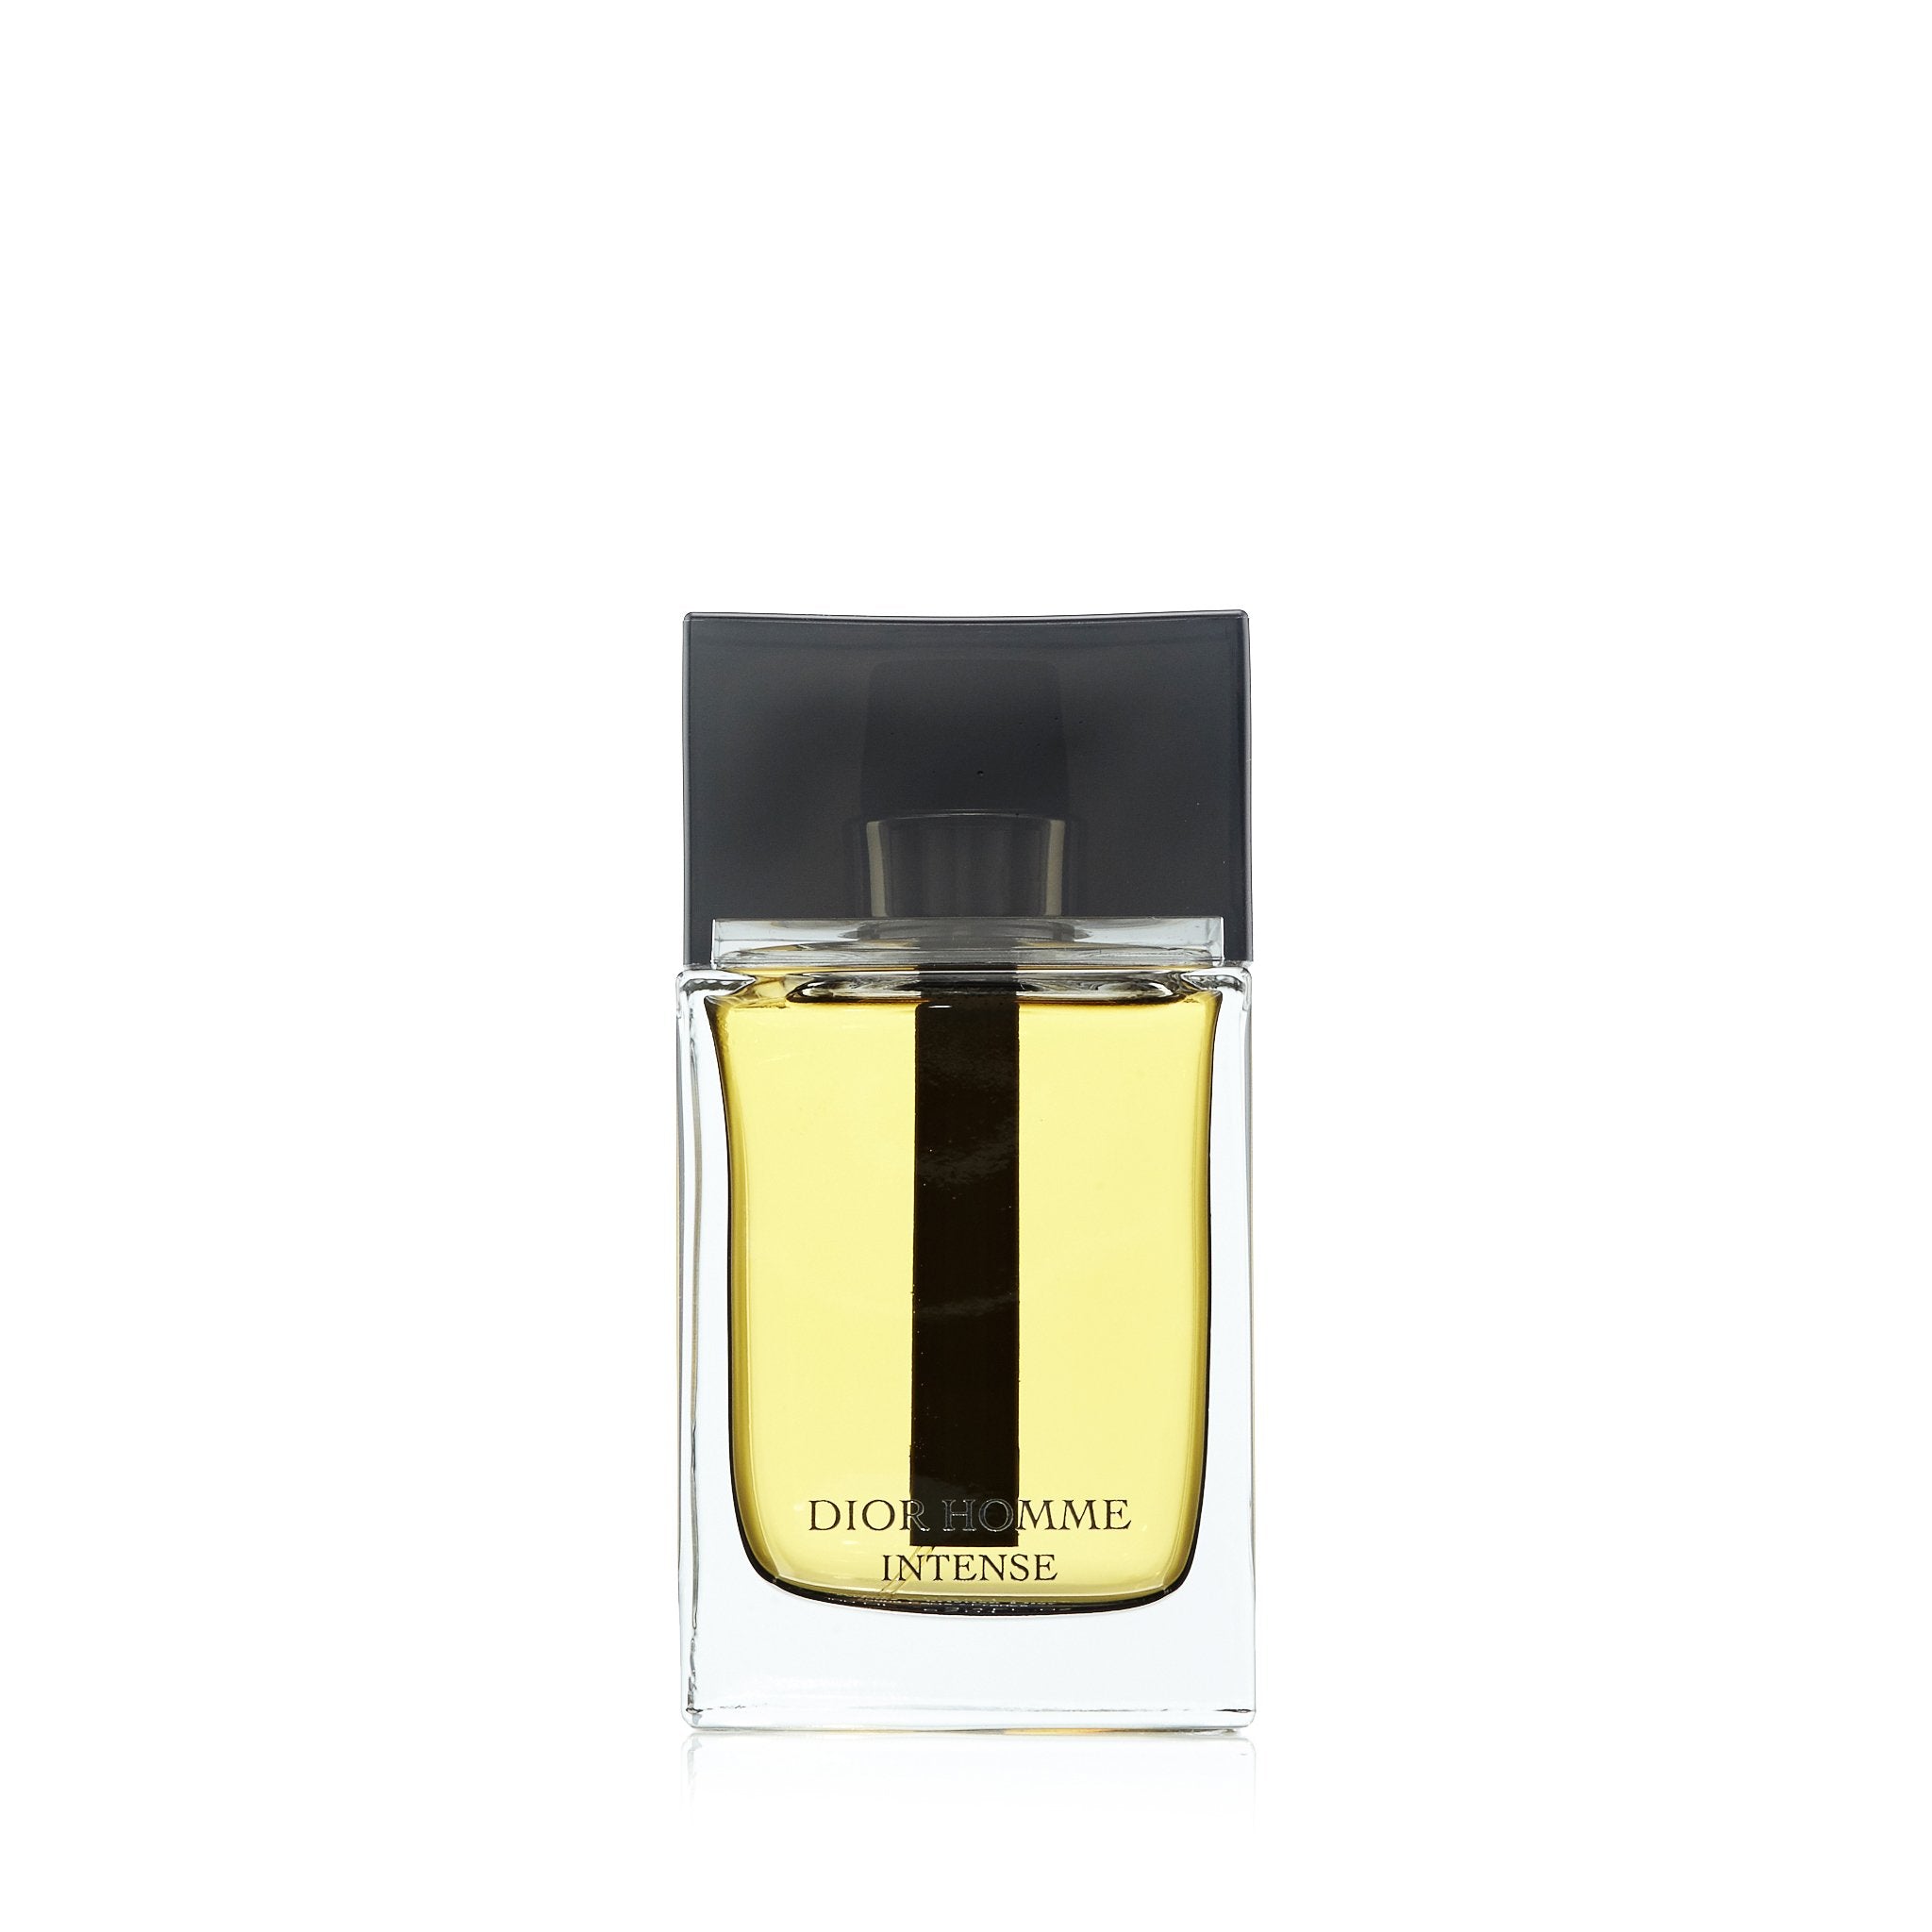 Dior Christian Dior Men's Homme Intense EDP Spray 5 oz Fragrances